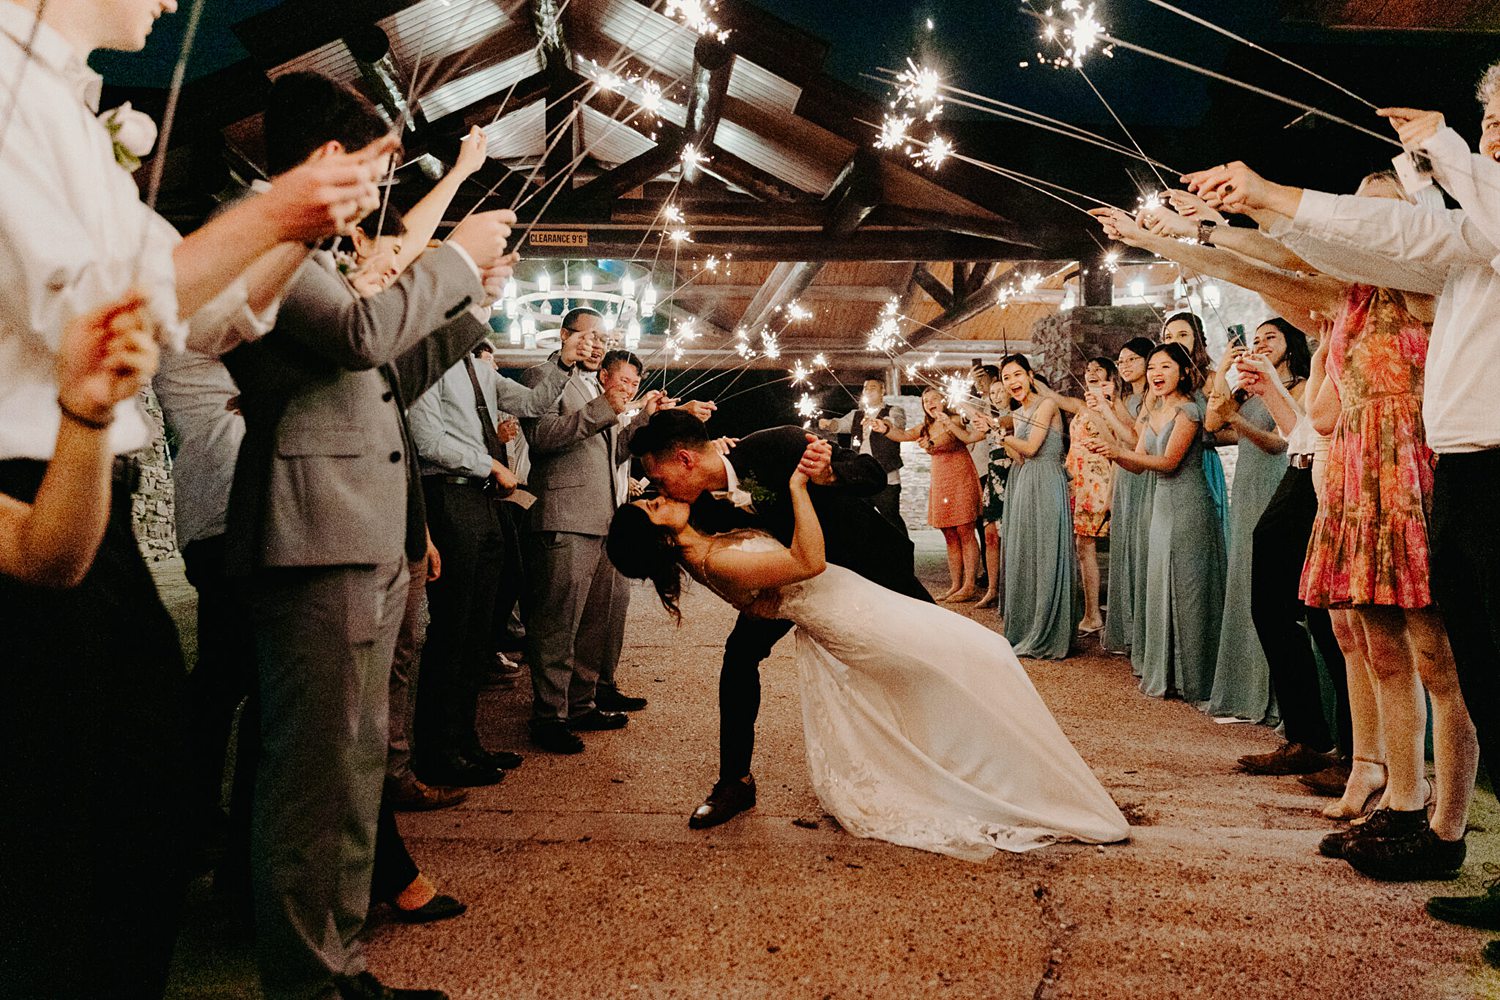 sparkler exit at wedding - los angeles wedding photographer